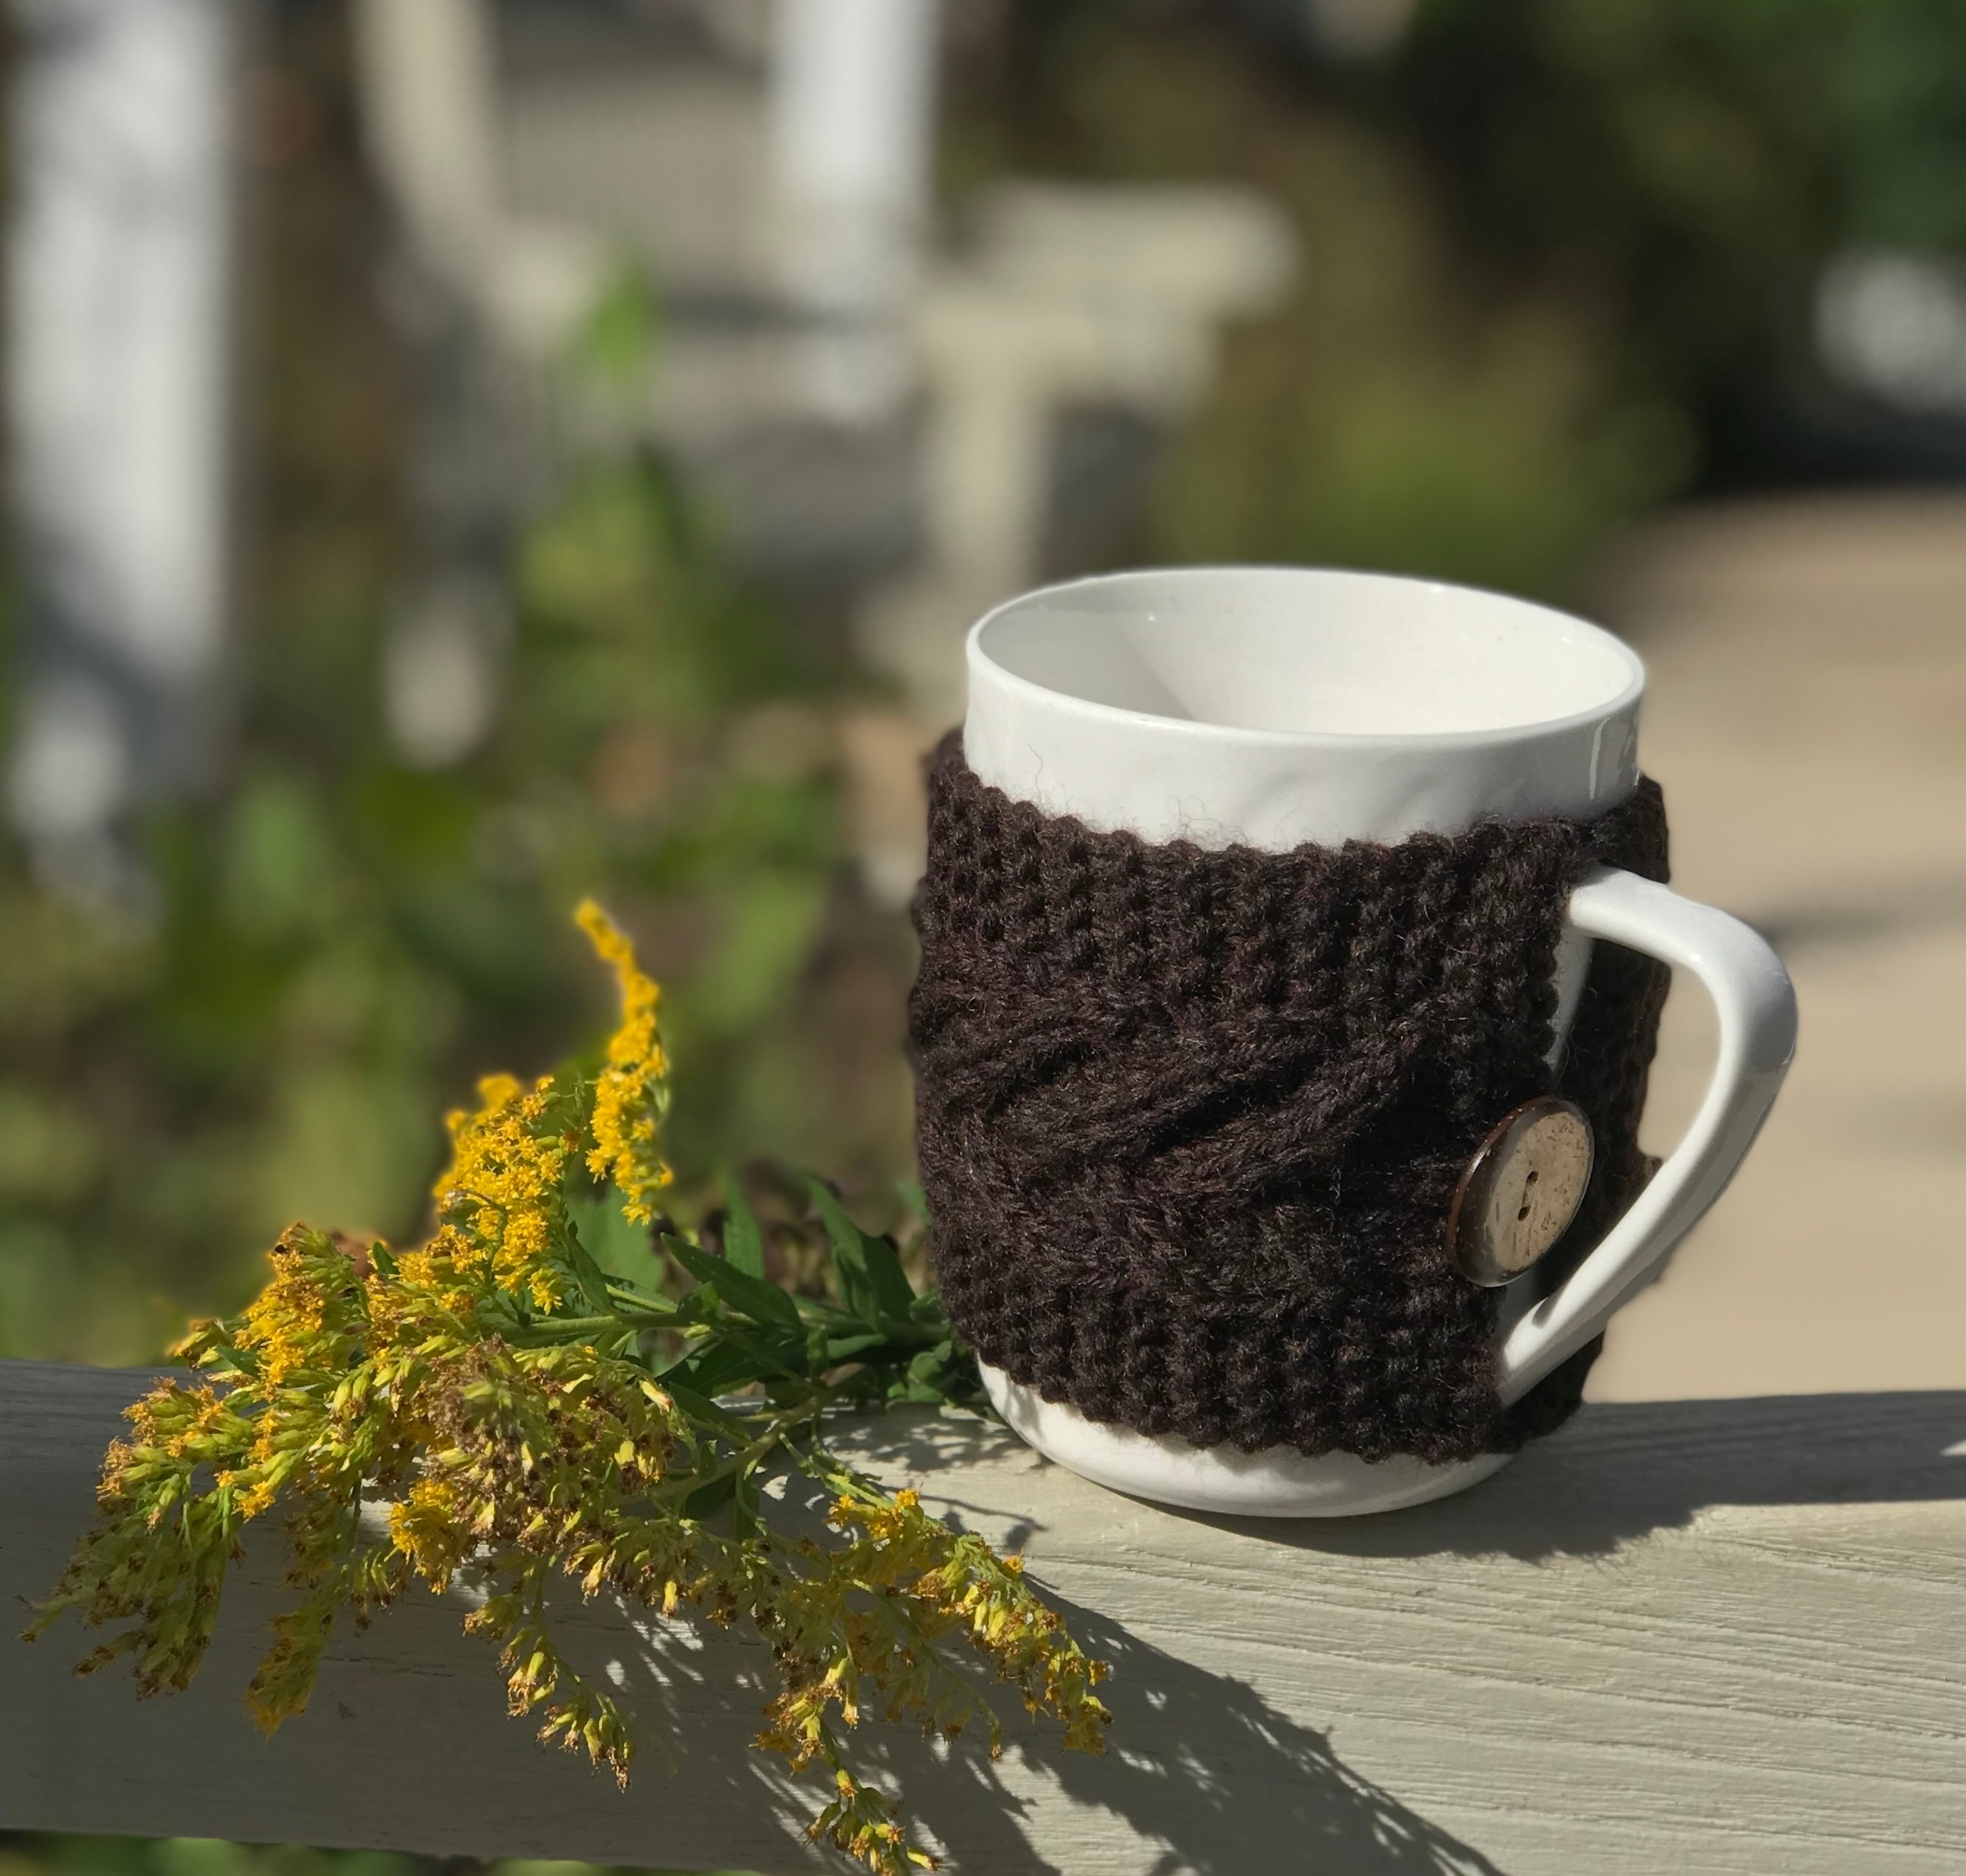 Mug Cozy Crochet Mug Wrap Mug Warmer Farmhouse Coffee Cozy Tea Cozy Cup  Cozy Mug Sweater Made to Order 